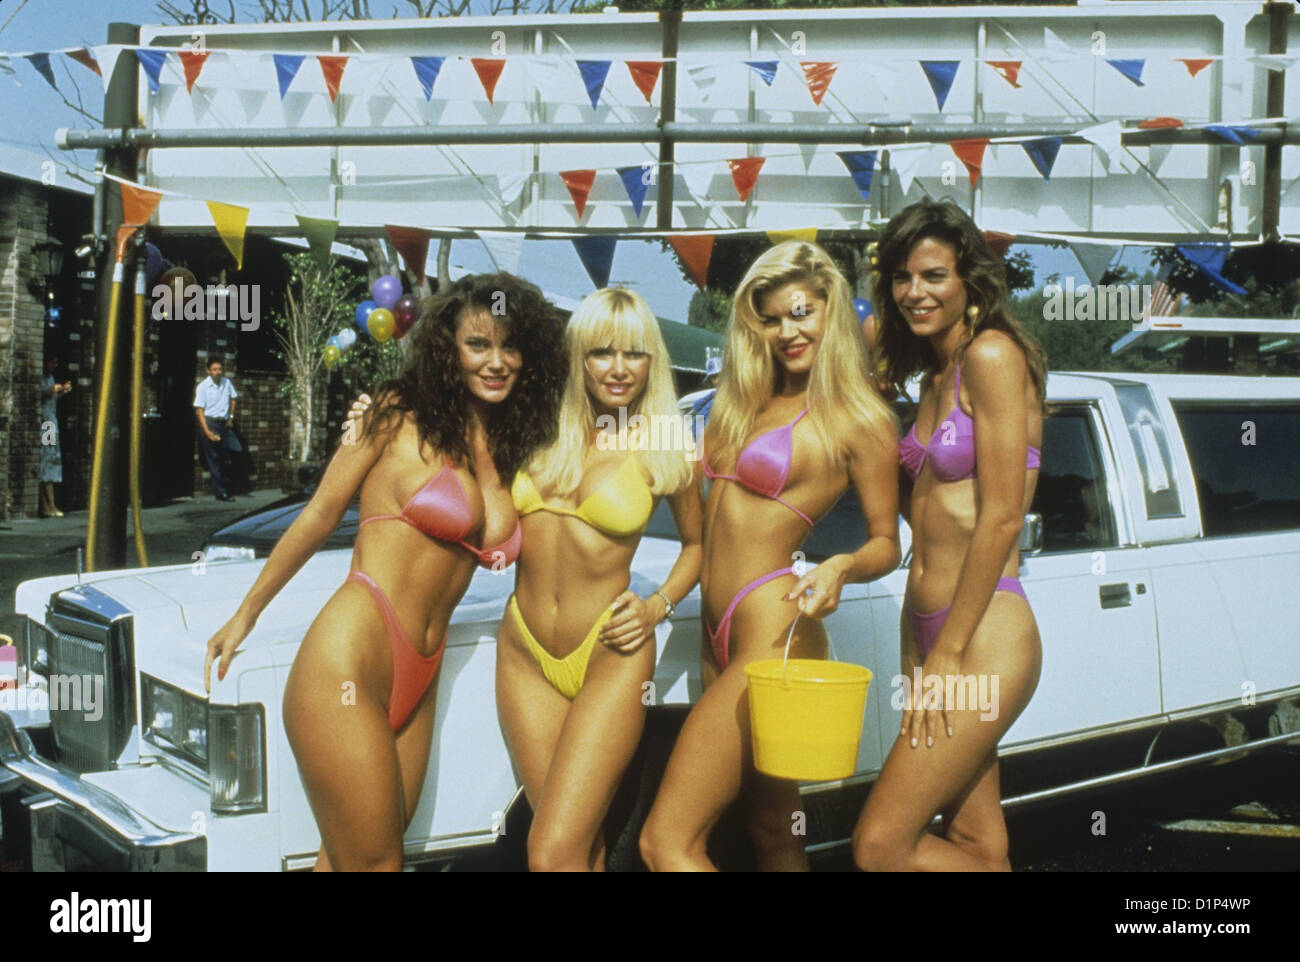 all american bikini car wash the bikini carwash company - www.djk9.net.